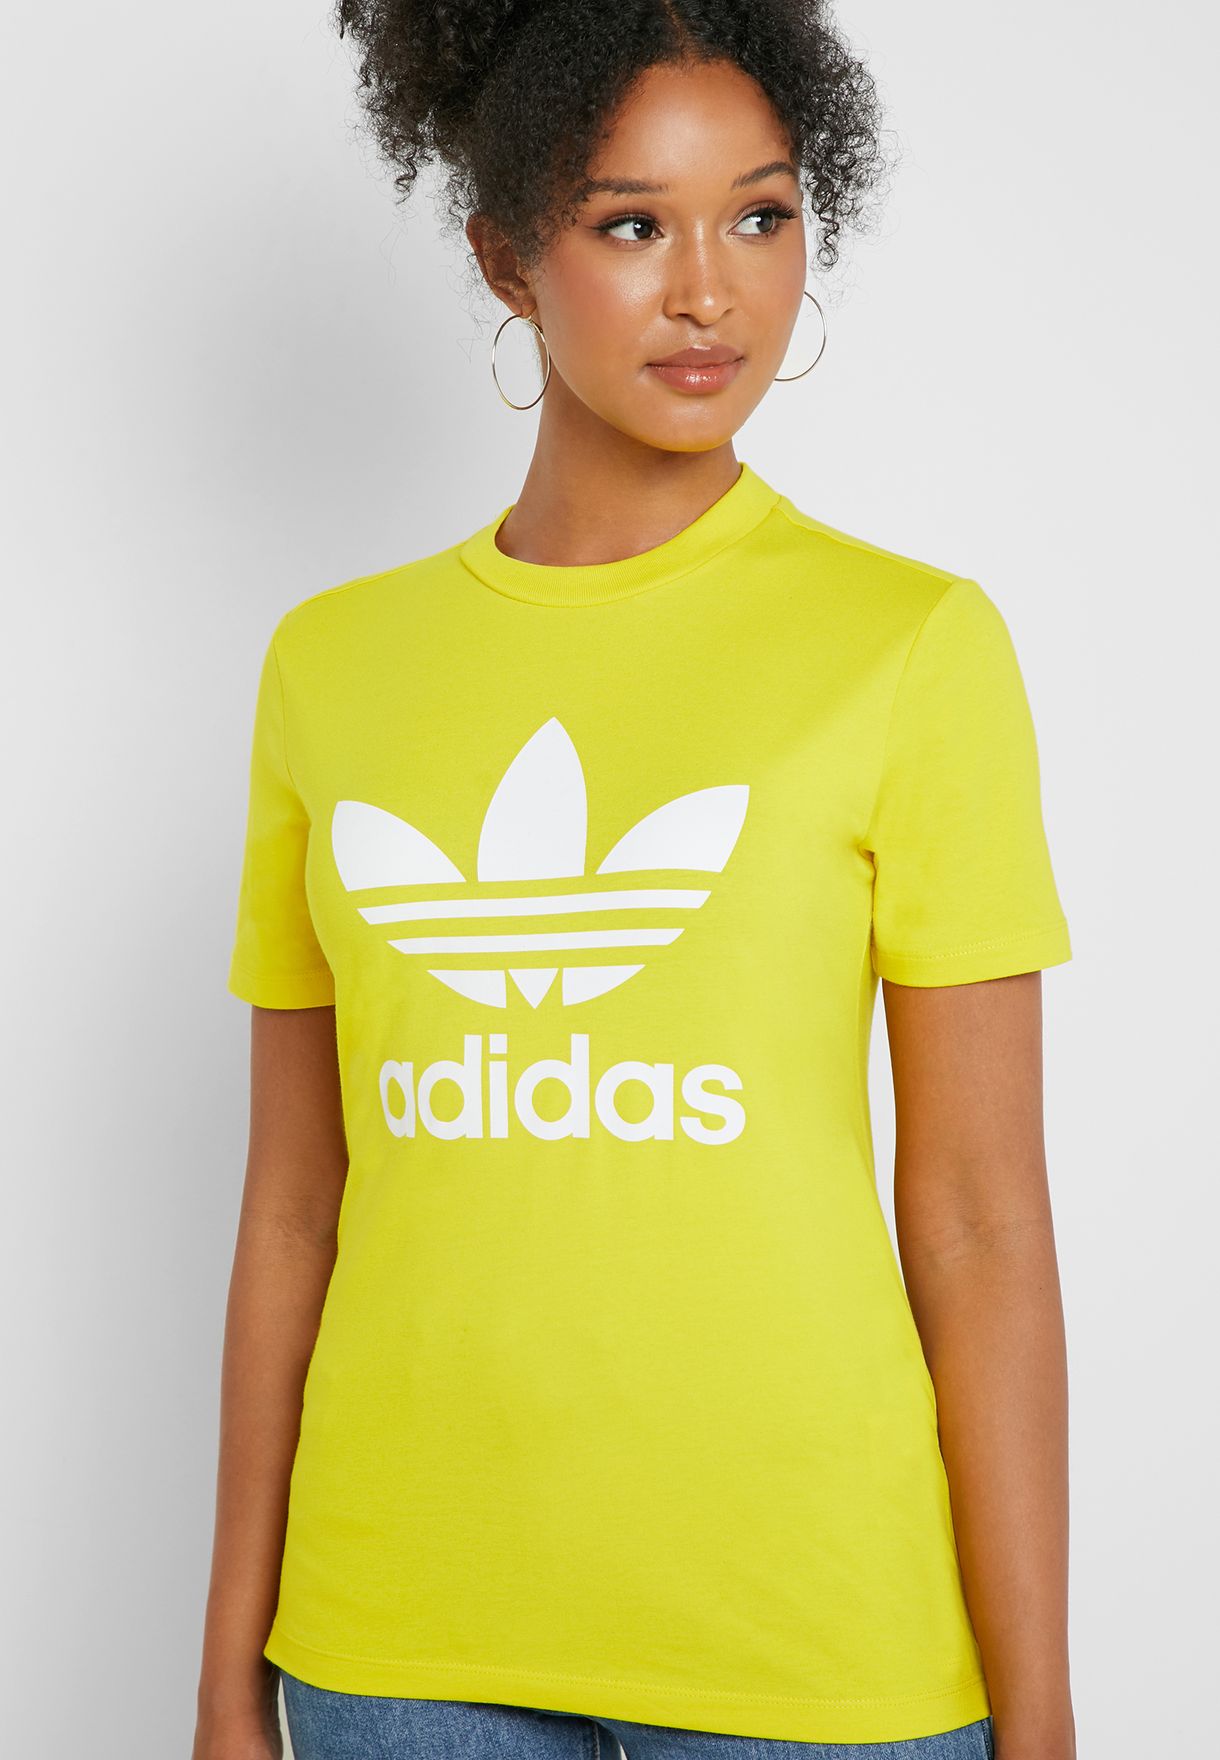 Buy > yellow adidas t shirt women's > in stock